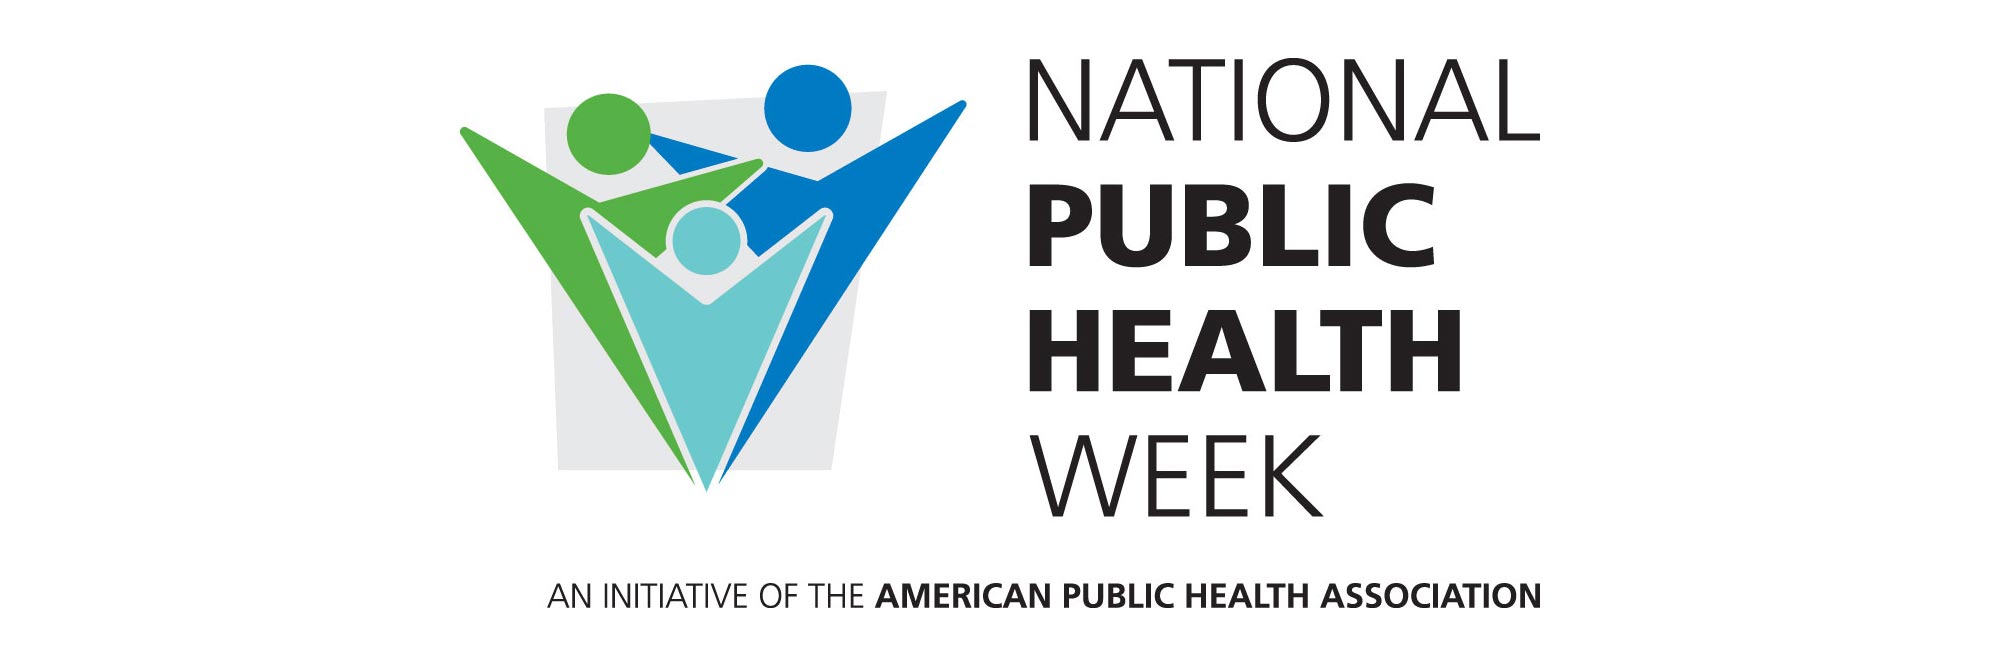 National Public Health Week, An Initiative of the American Public Health Association